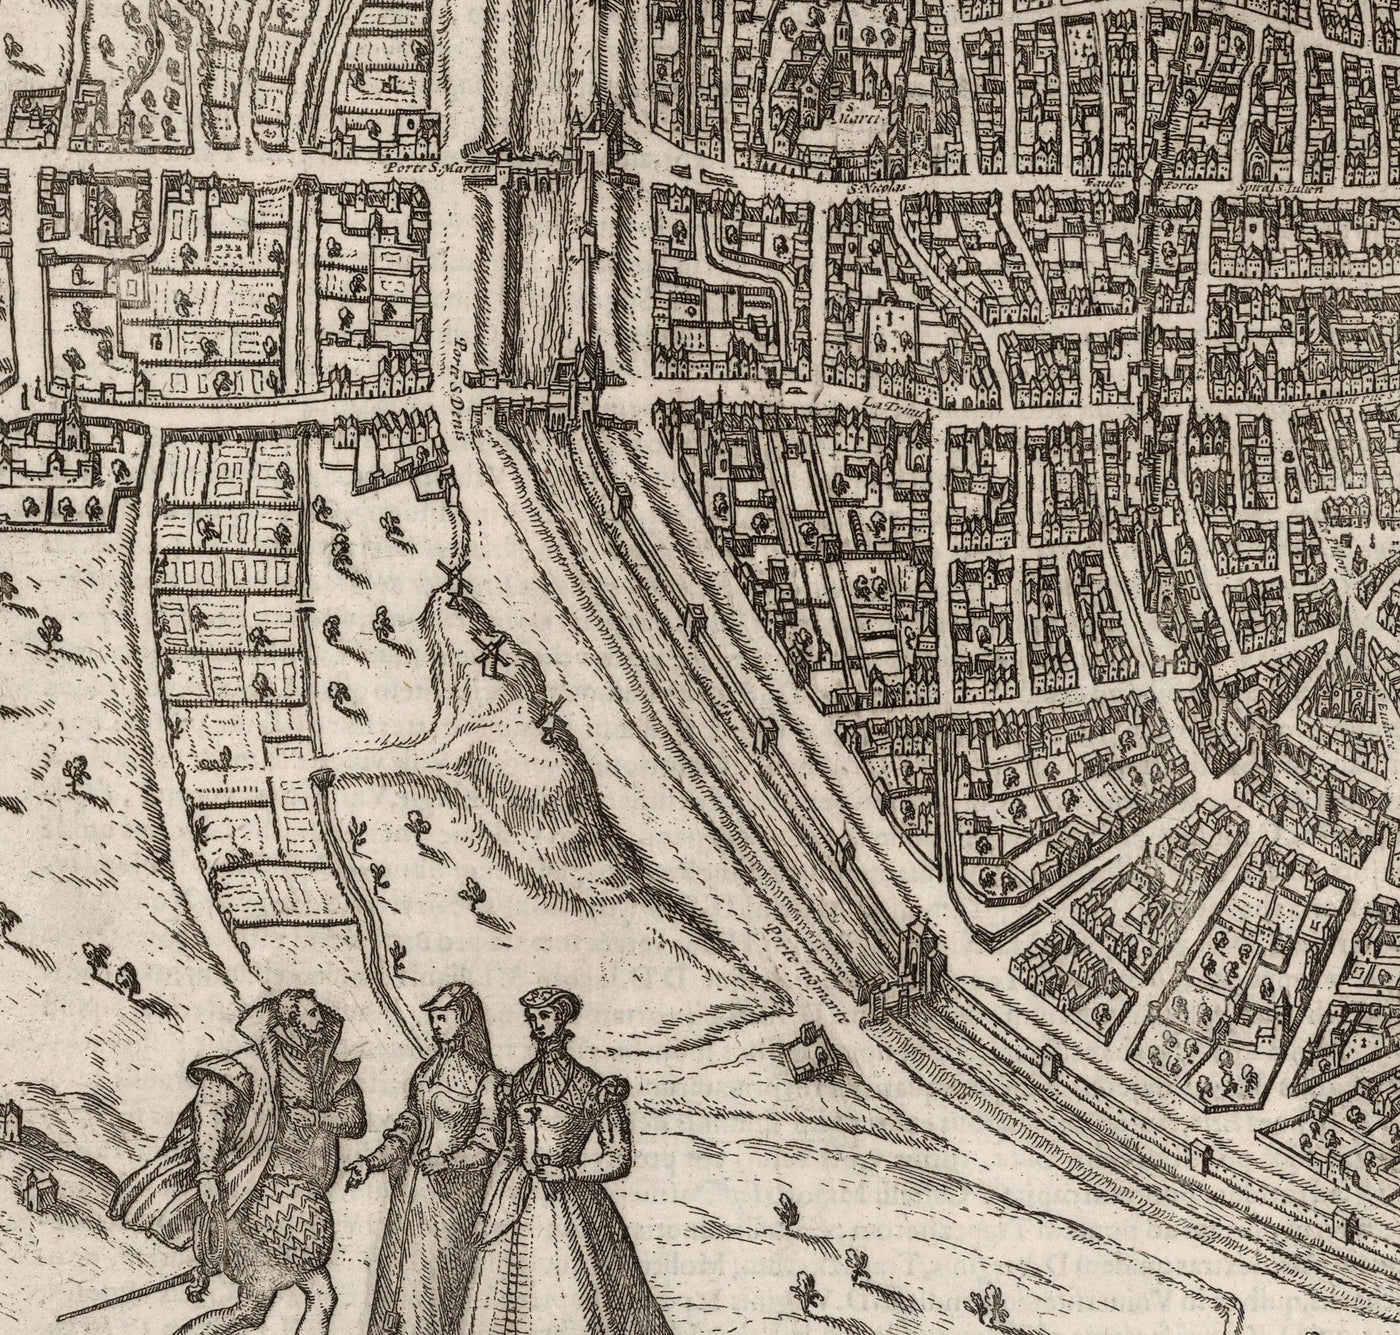 Old Monochrome Map of Paris, 1572 by Braun - Notre Dame, Sainte Chapelle, Bastille, Seine, Cathedral, City Walls